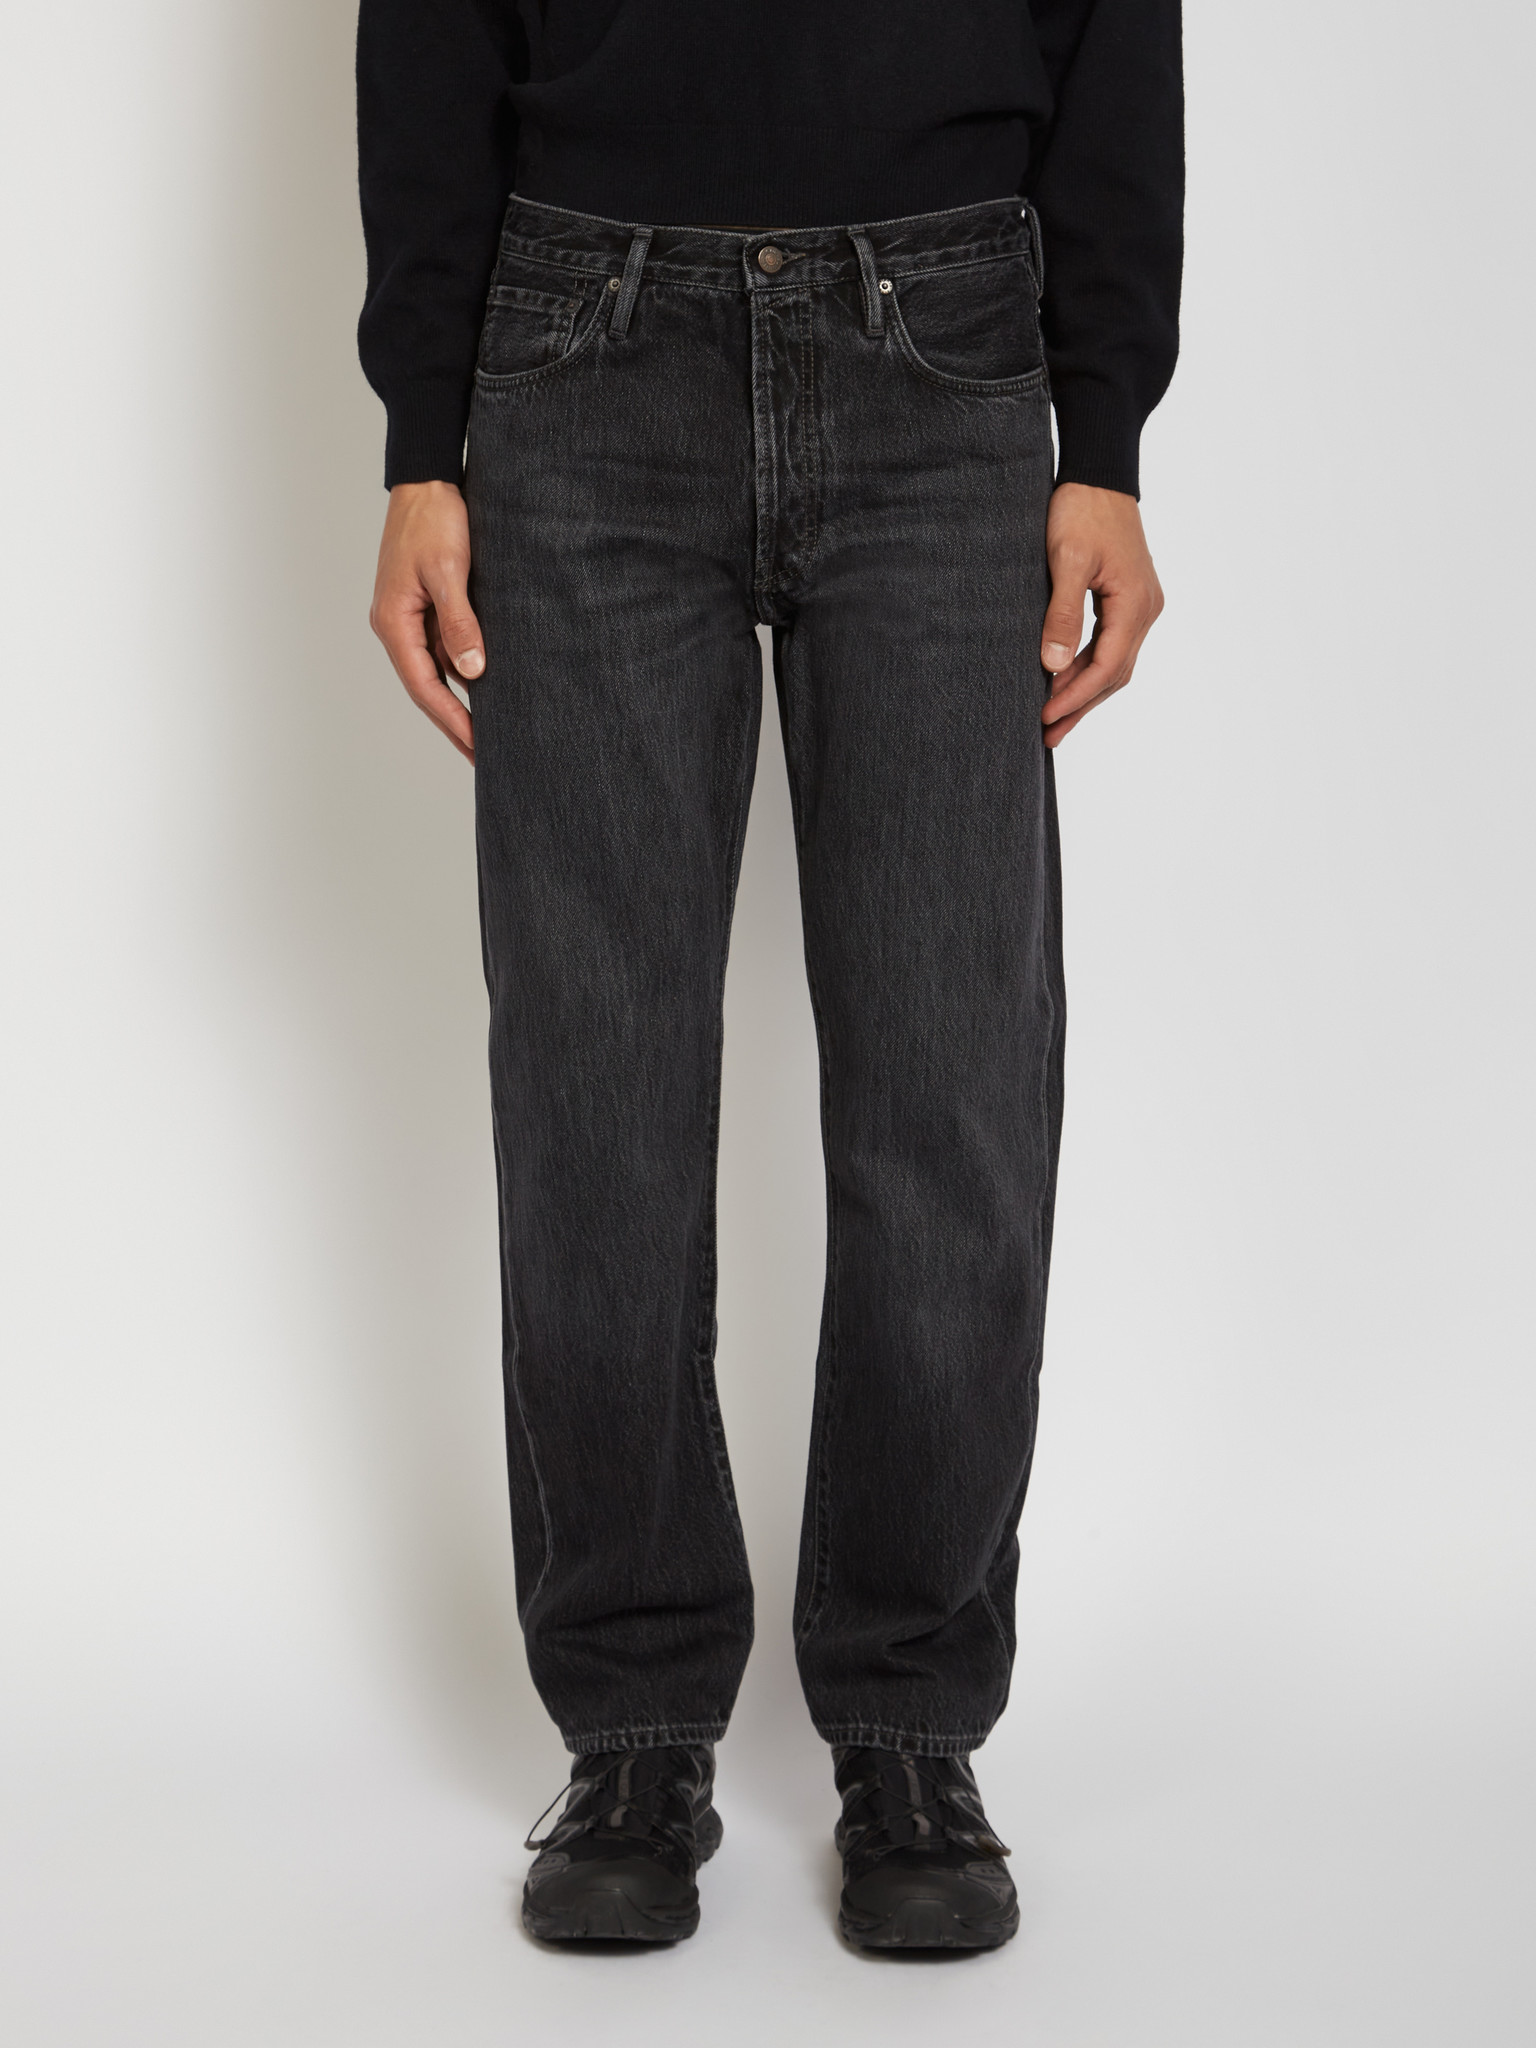 Acne Studio: Vintage Black Jeans 1996, Men's Designer Clothes